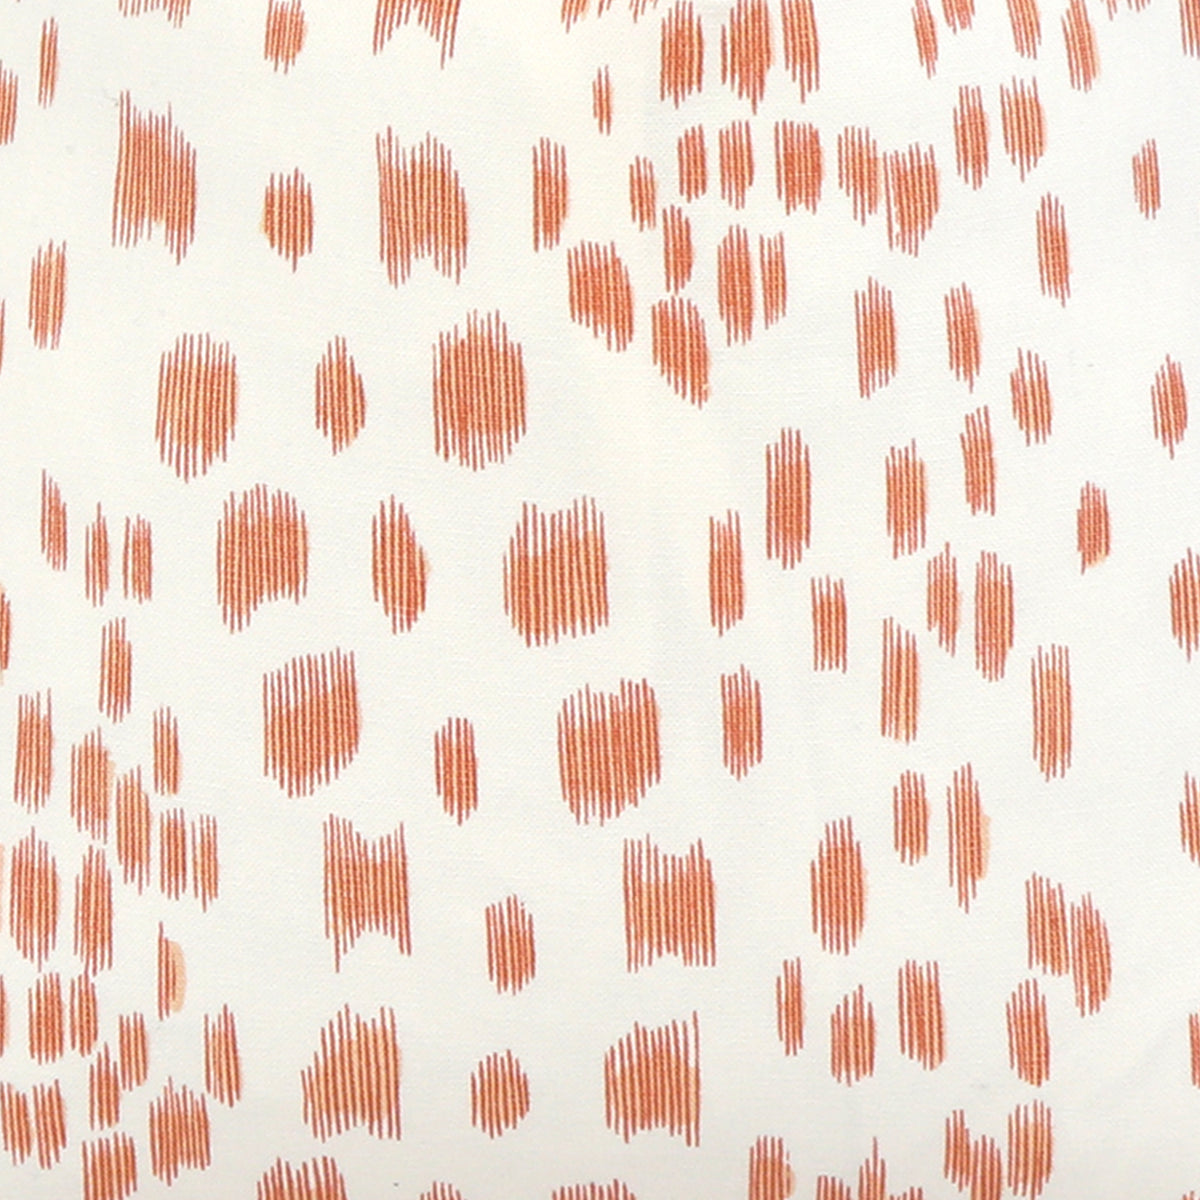 Les Touches Tangerine Orange / 4x4 inch Fabric Swatch